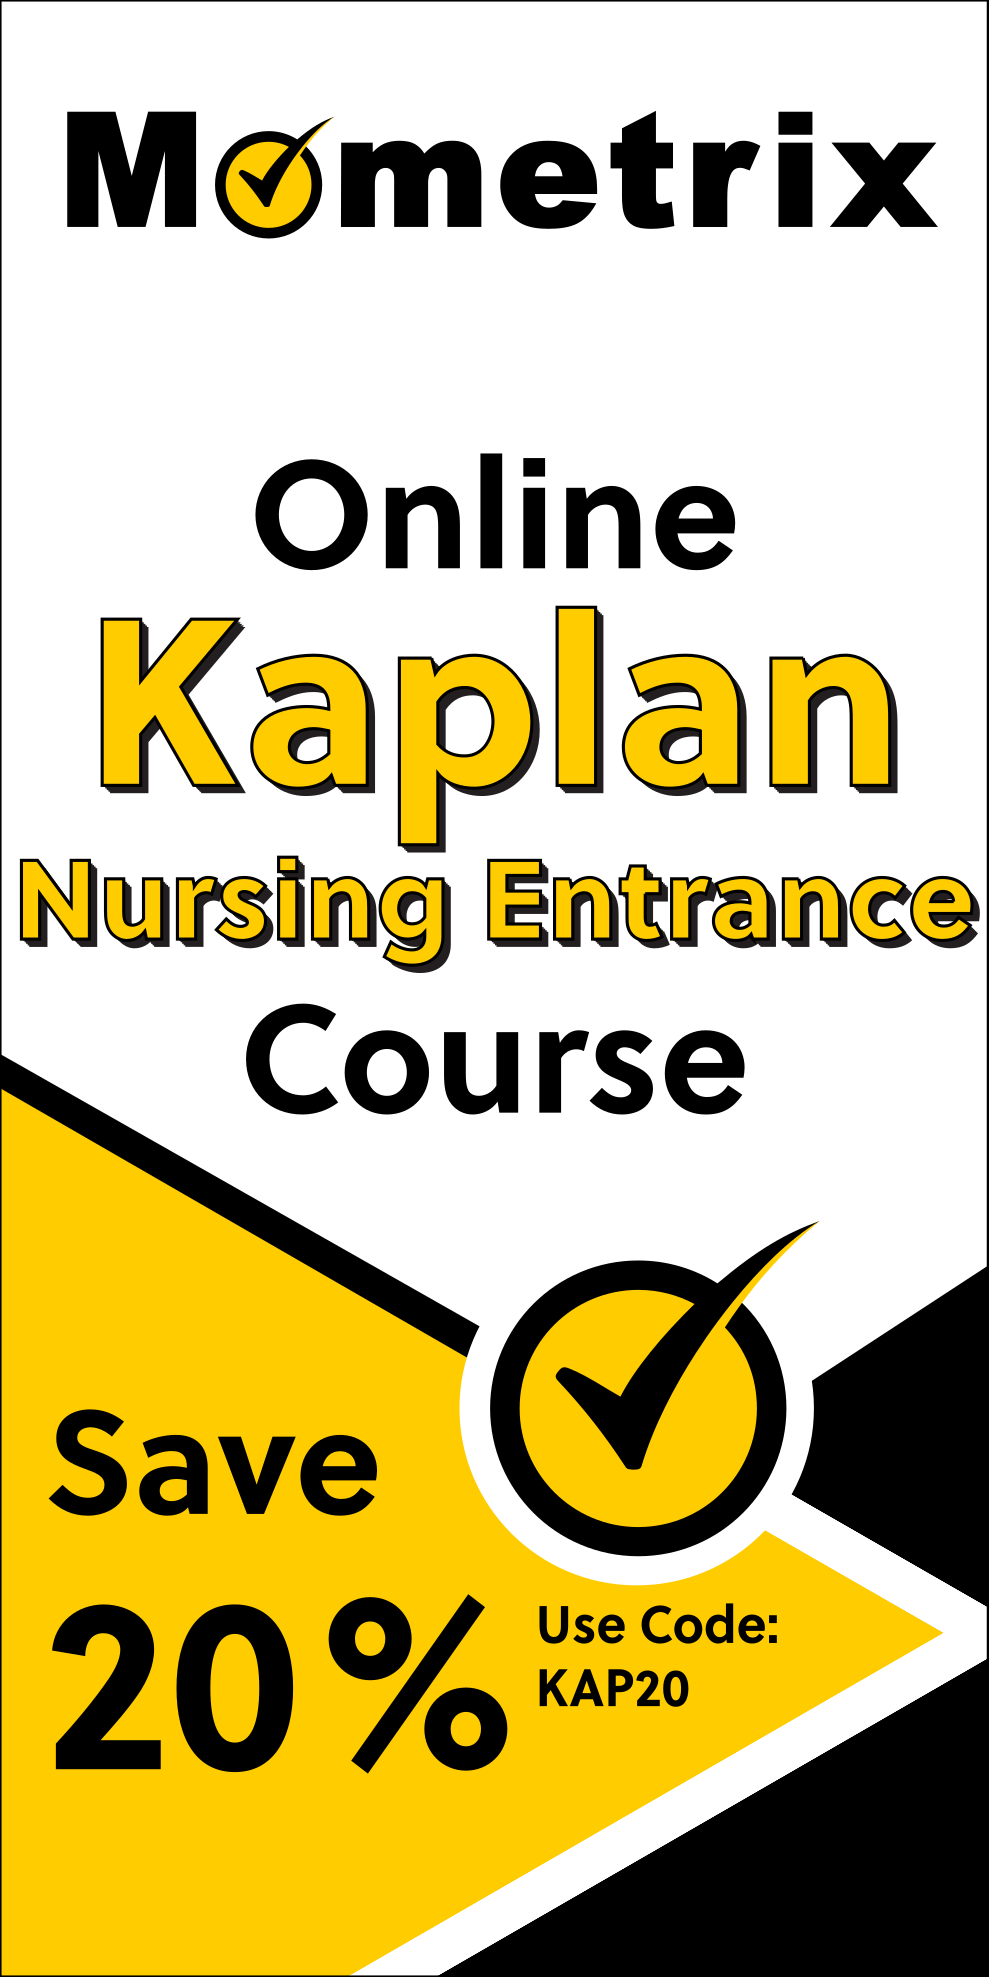 Click here for 20% off of Mometrix Kaplan Nursing online course. Use code: KAP20